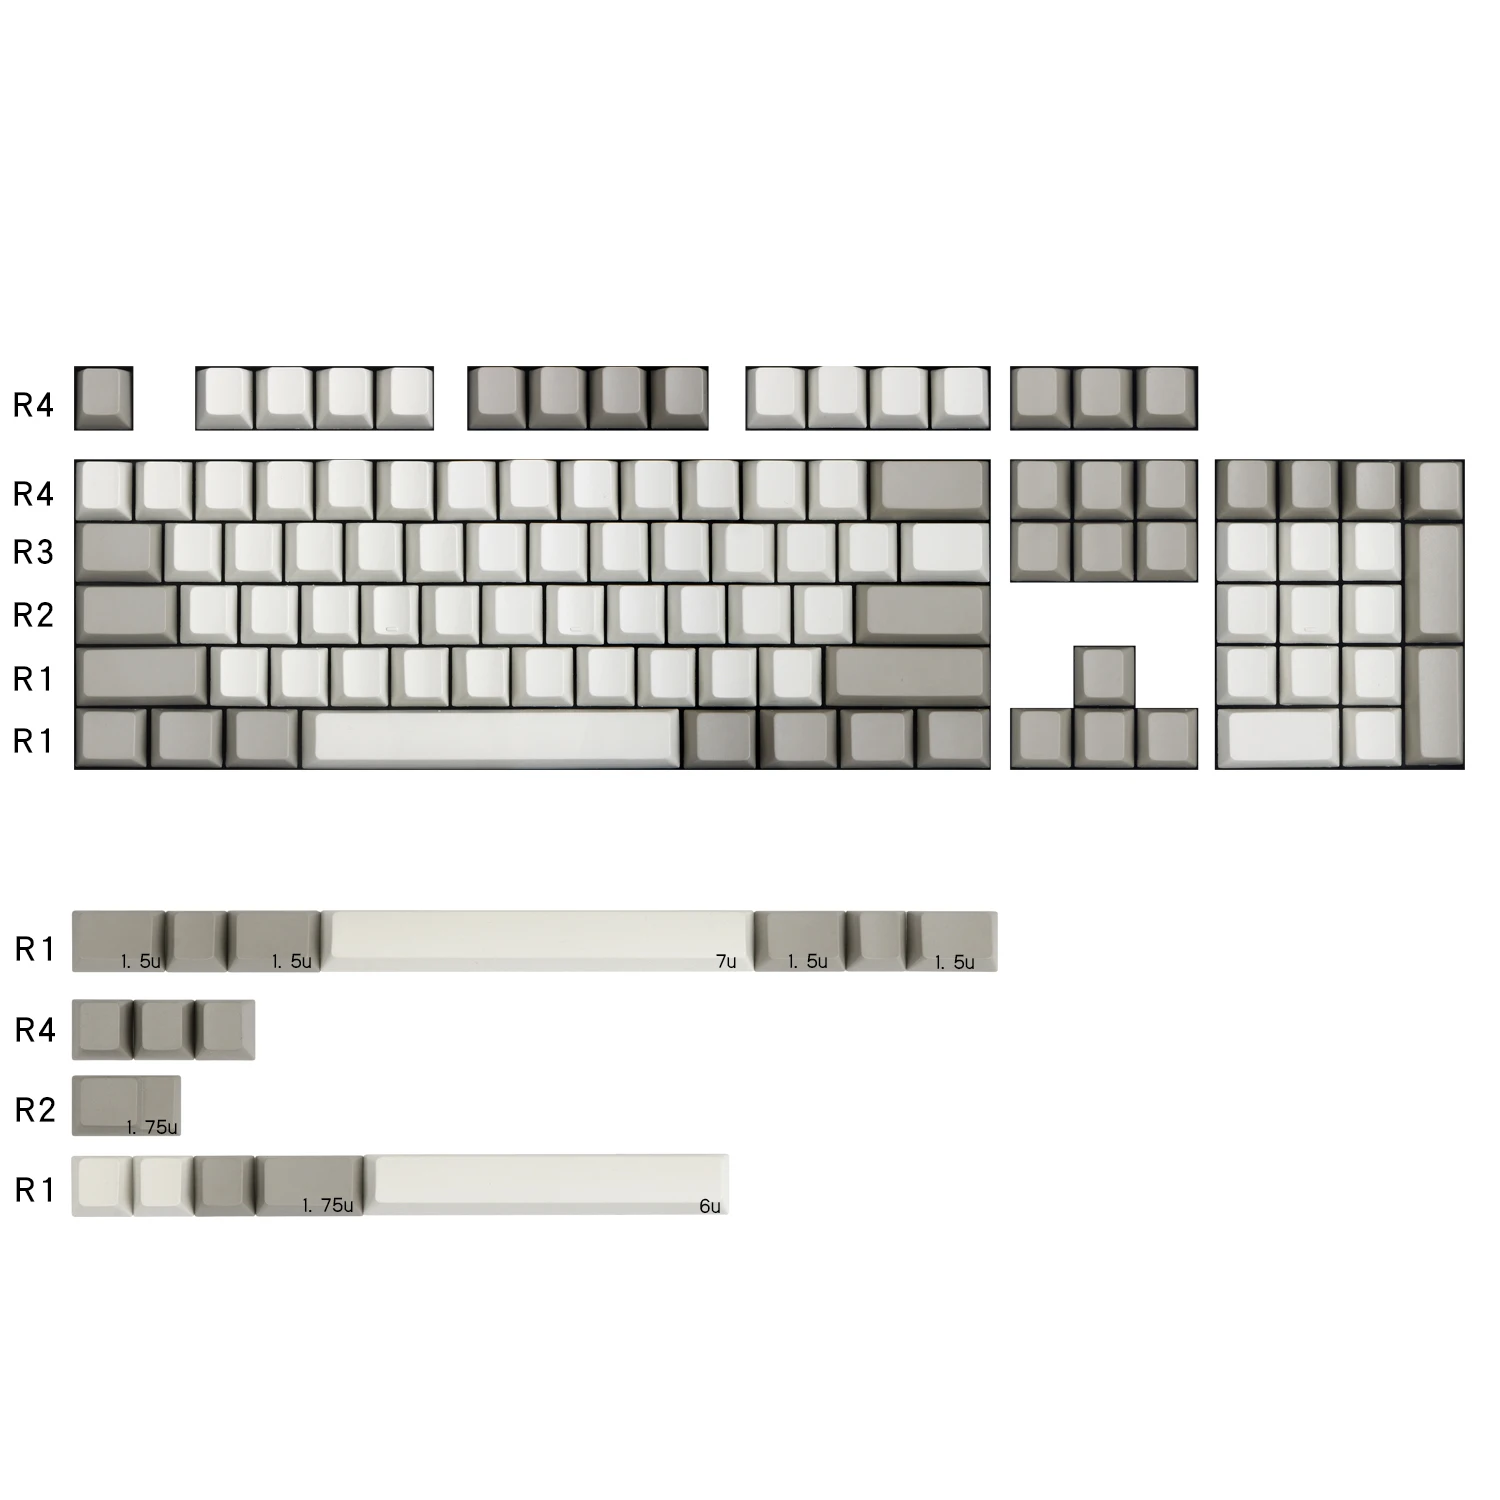 【Skyline】120 Keycap Enjoypbt Mechanical Keyboard Keycaps Thick PBT Blank Print Cherry Profile Retro Gray White